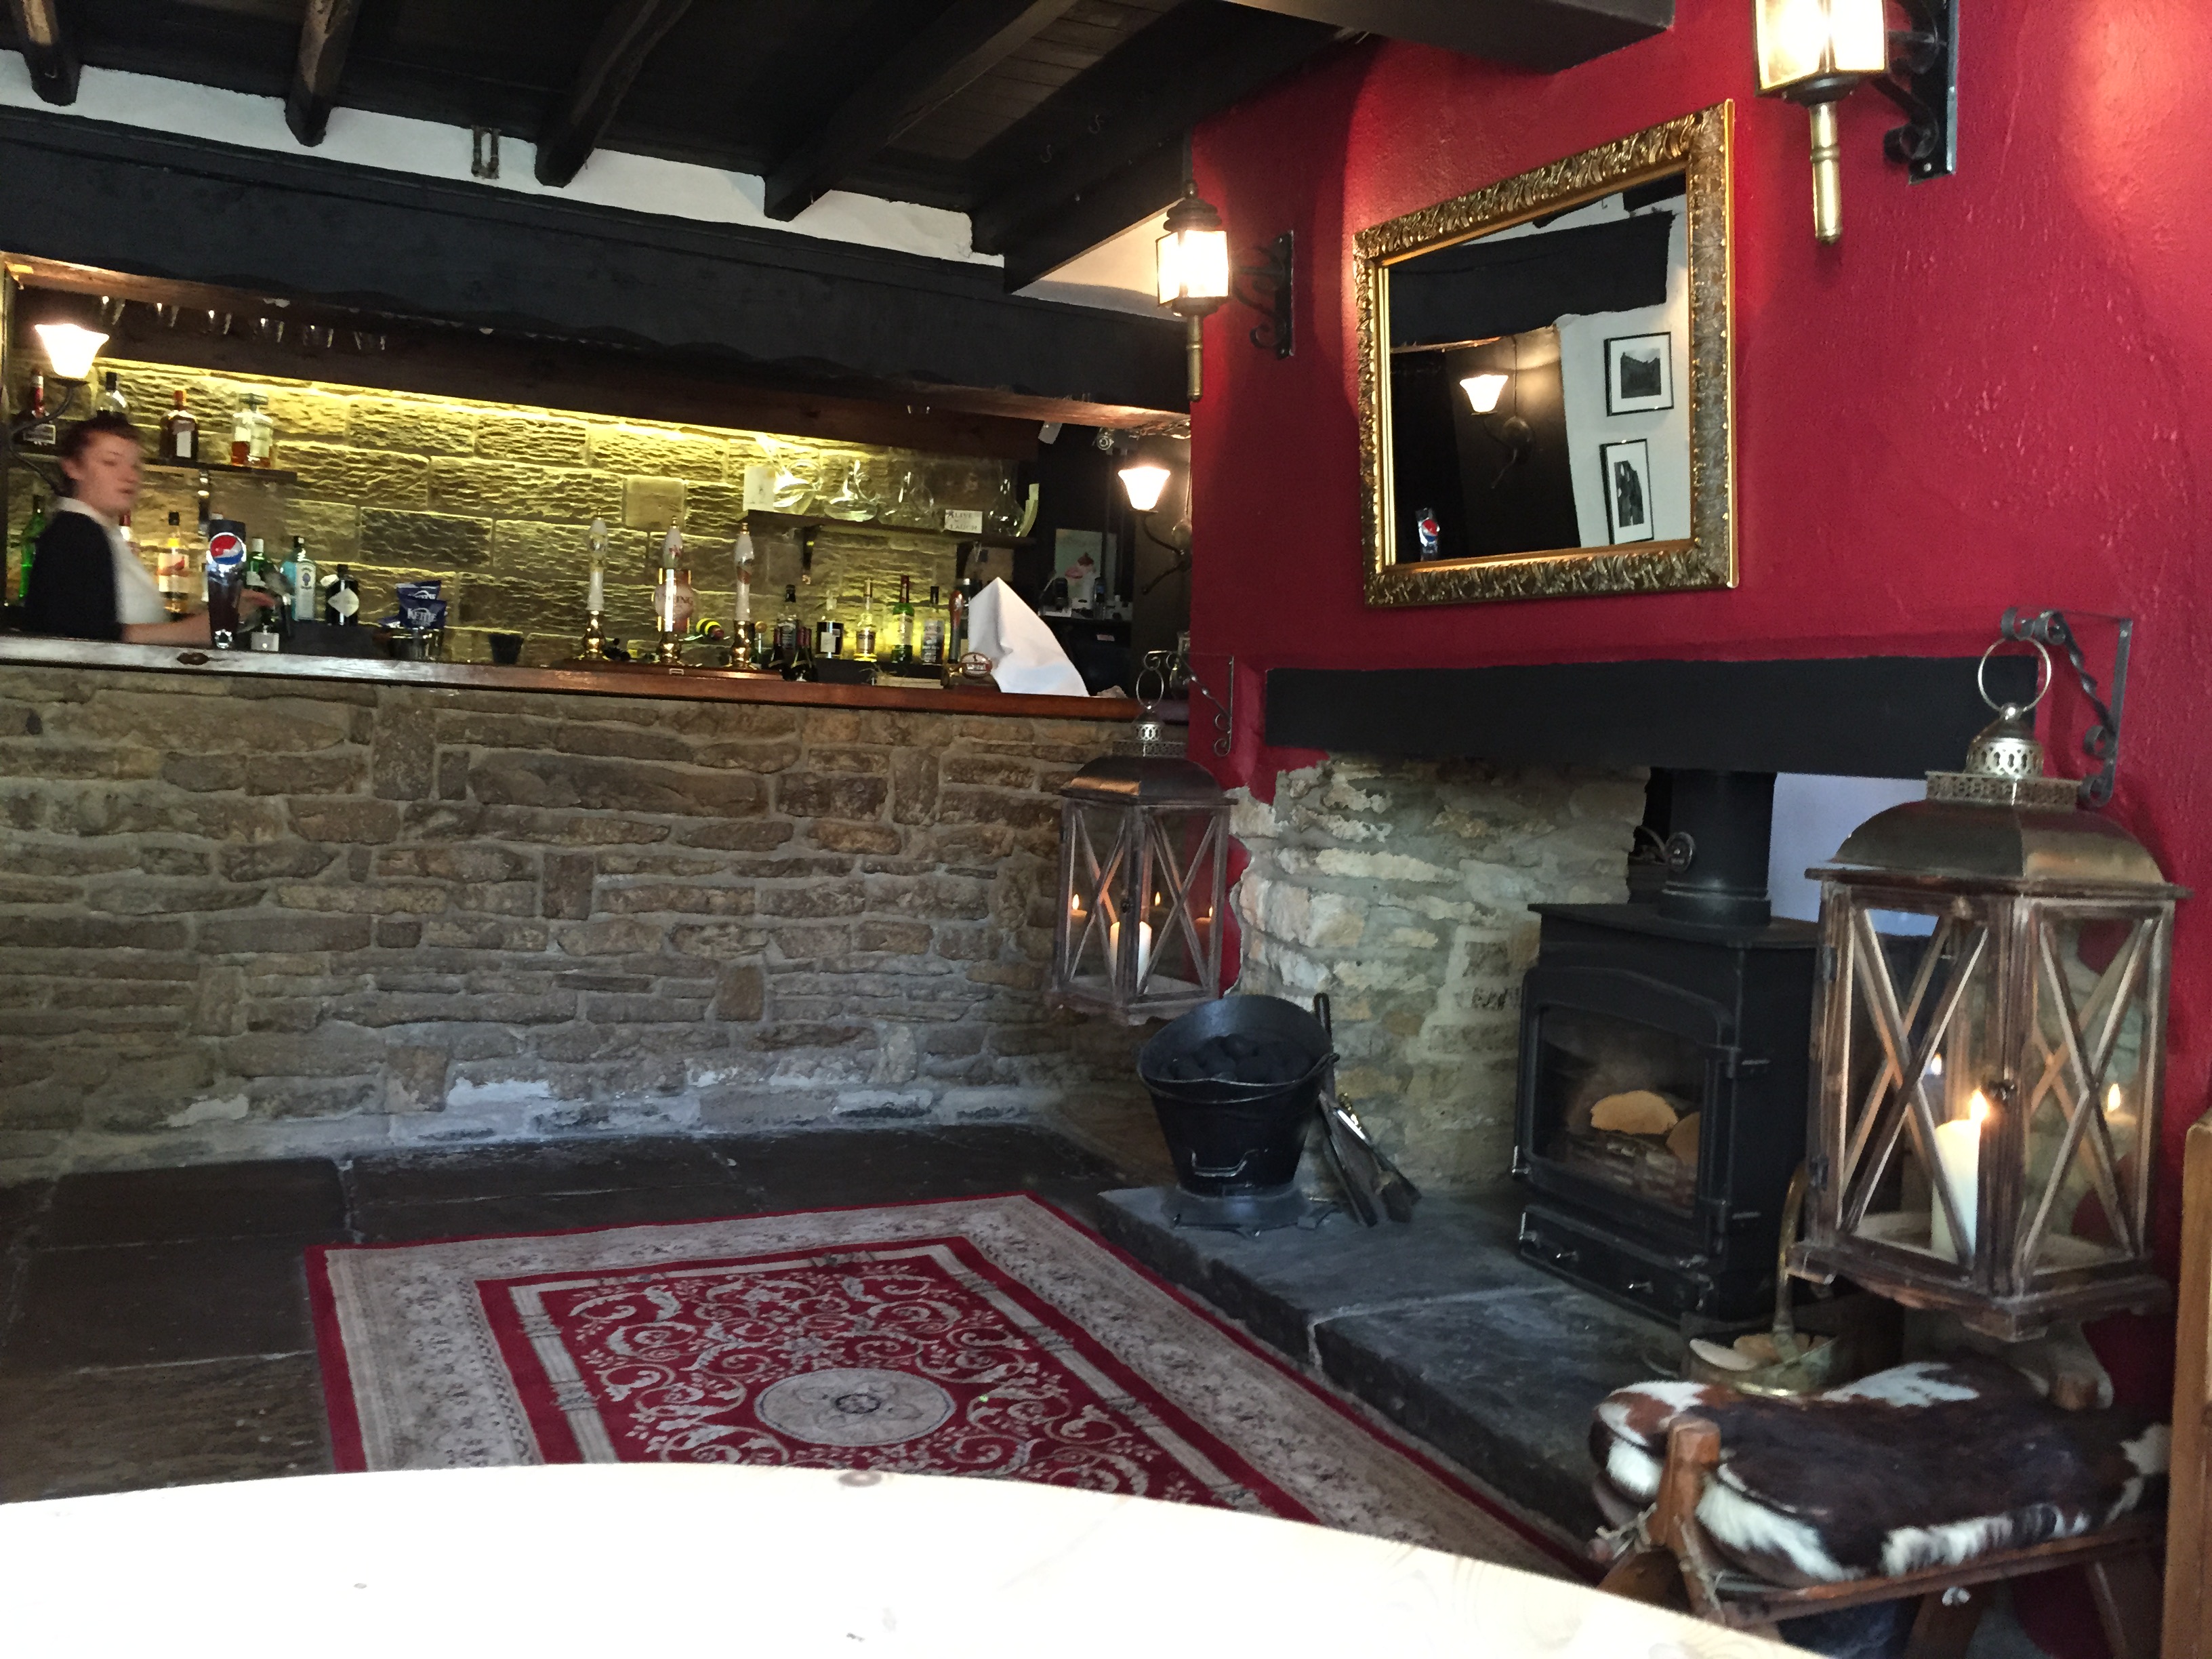 The Hare Inn at Scawton